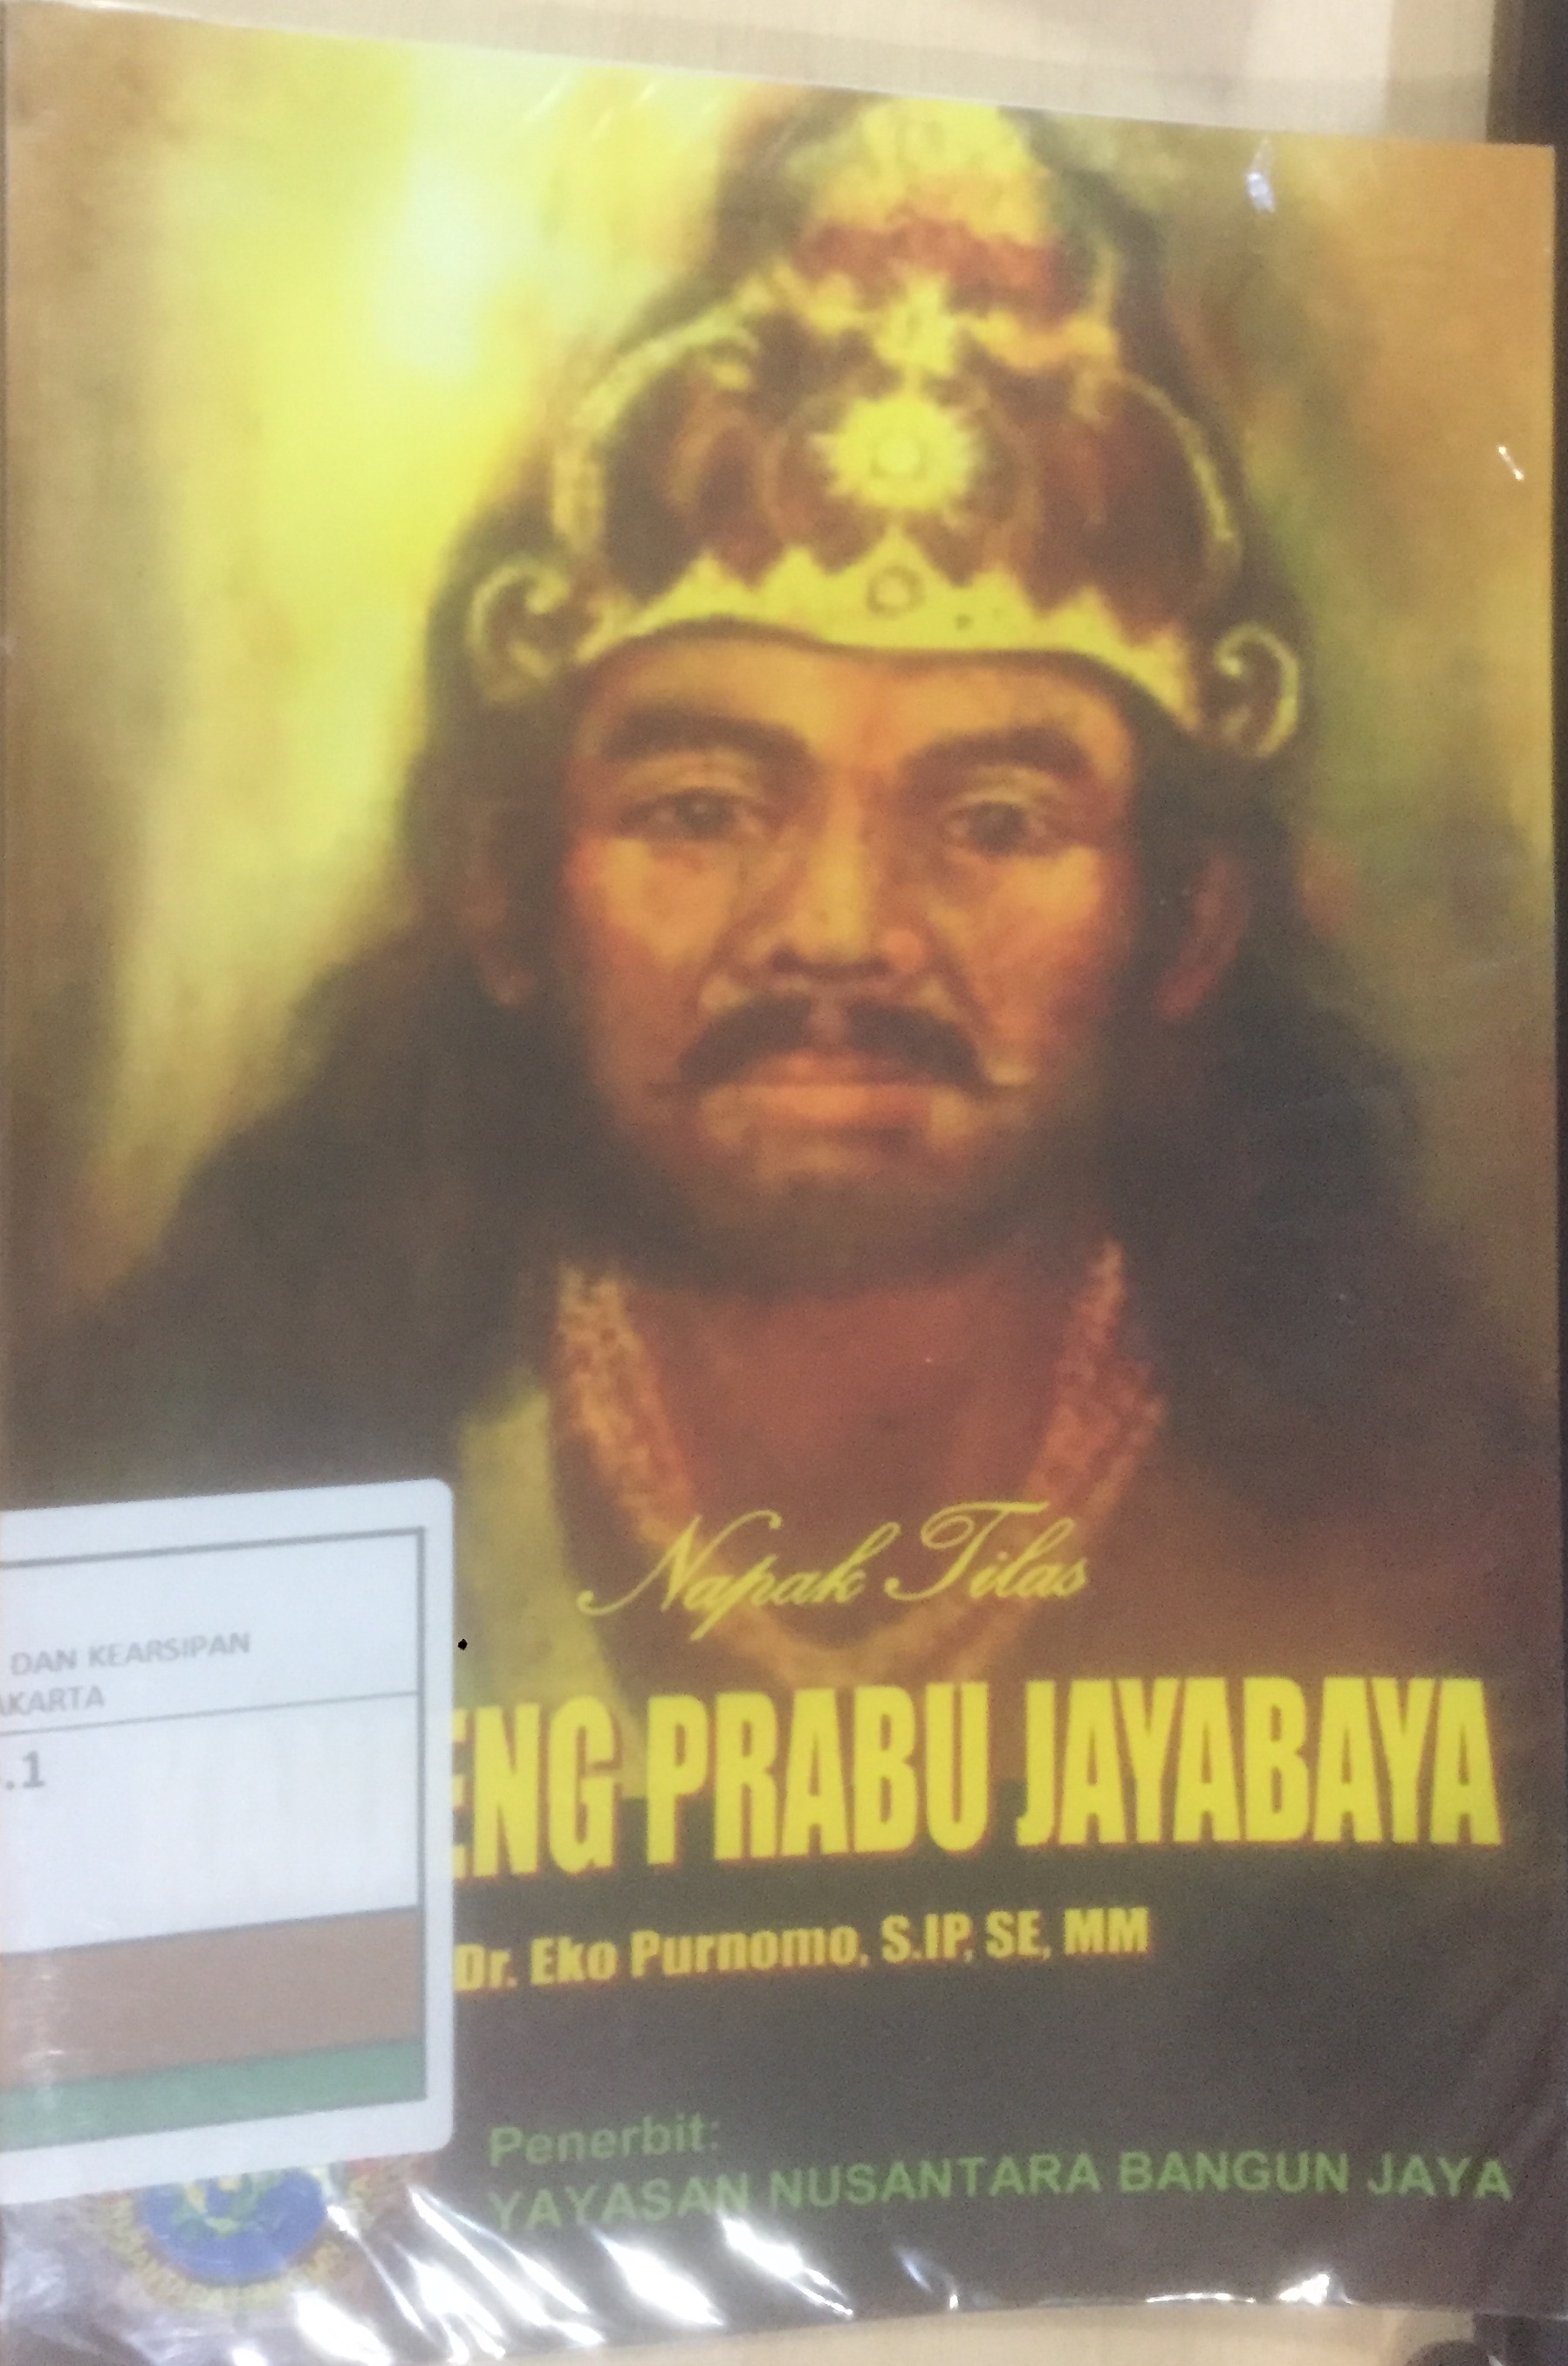 Napak Tilas Kanjeng Prabu Jayabaya